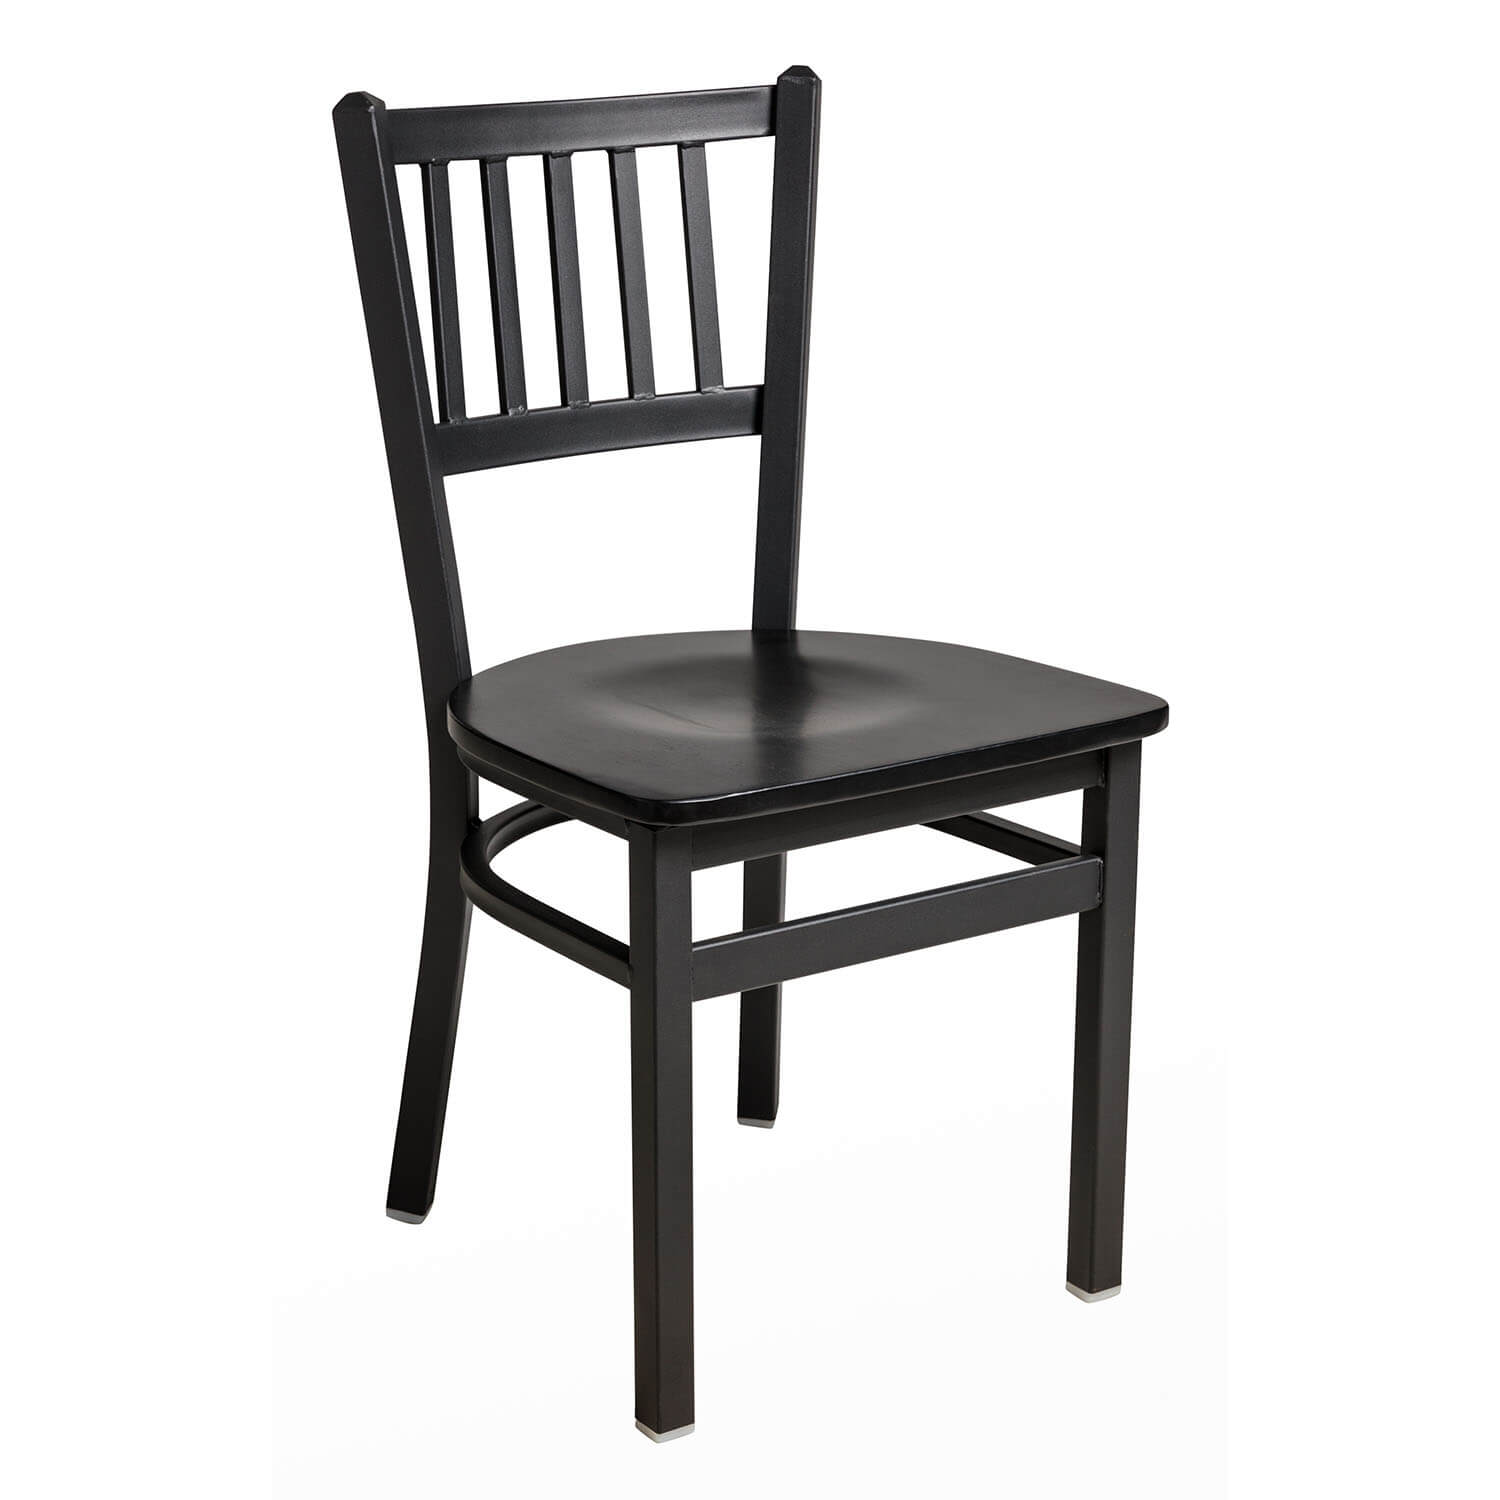 BFM Troy Slat Back Indoor Restaurant Metal Chair